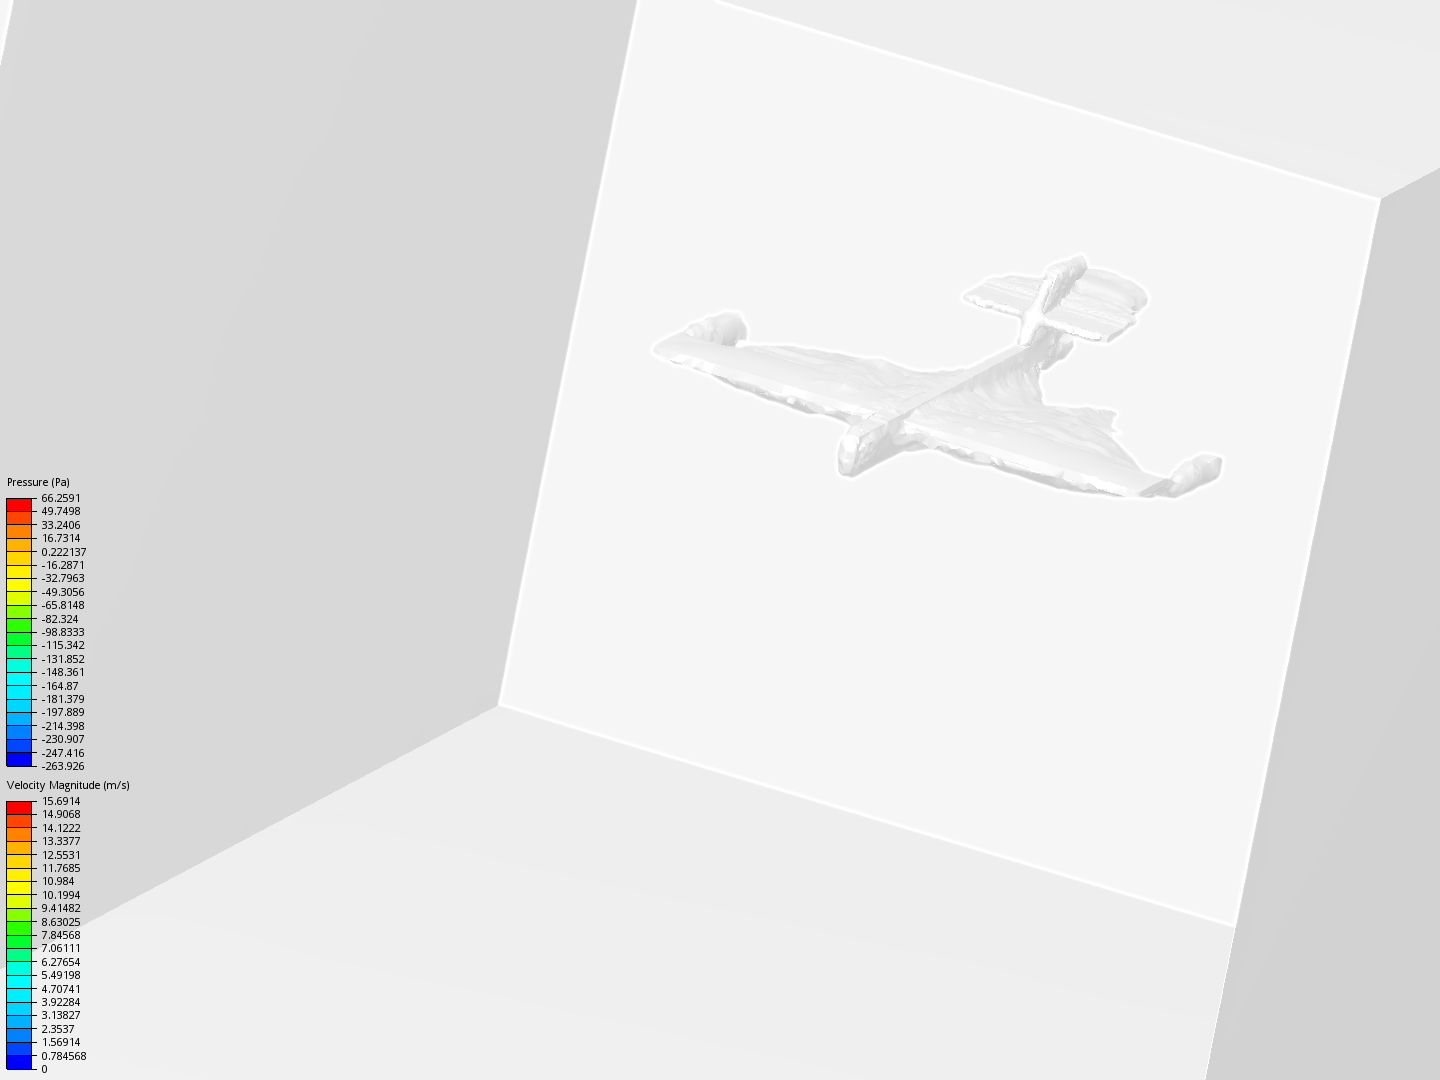 Simple glider analysis image